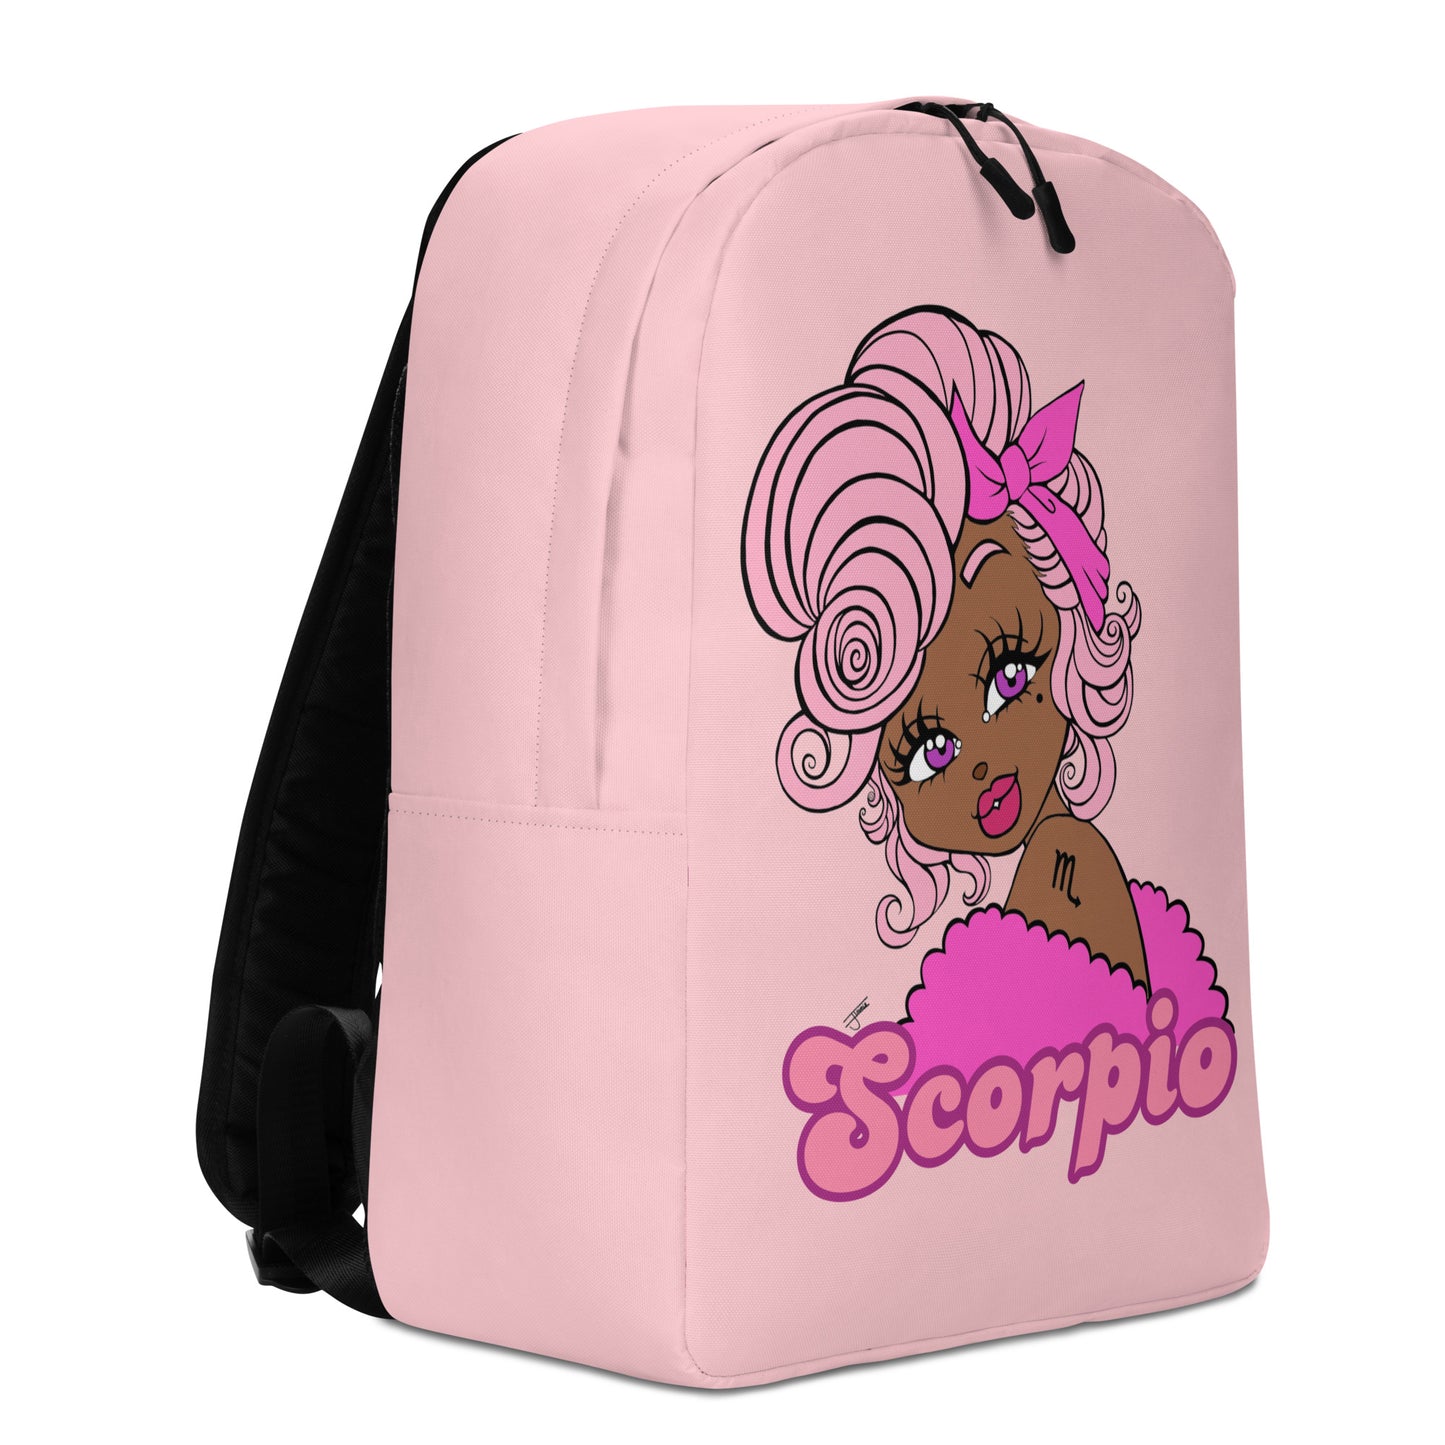 Miss Scorpio Pink Bookbag